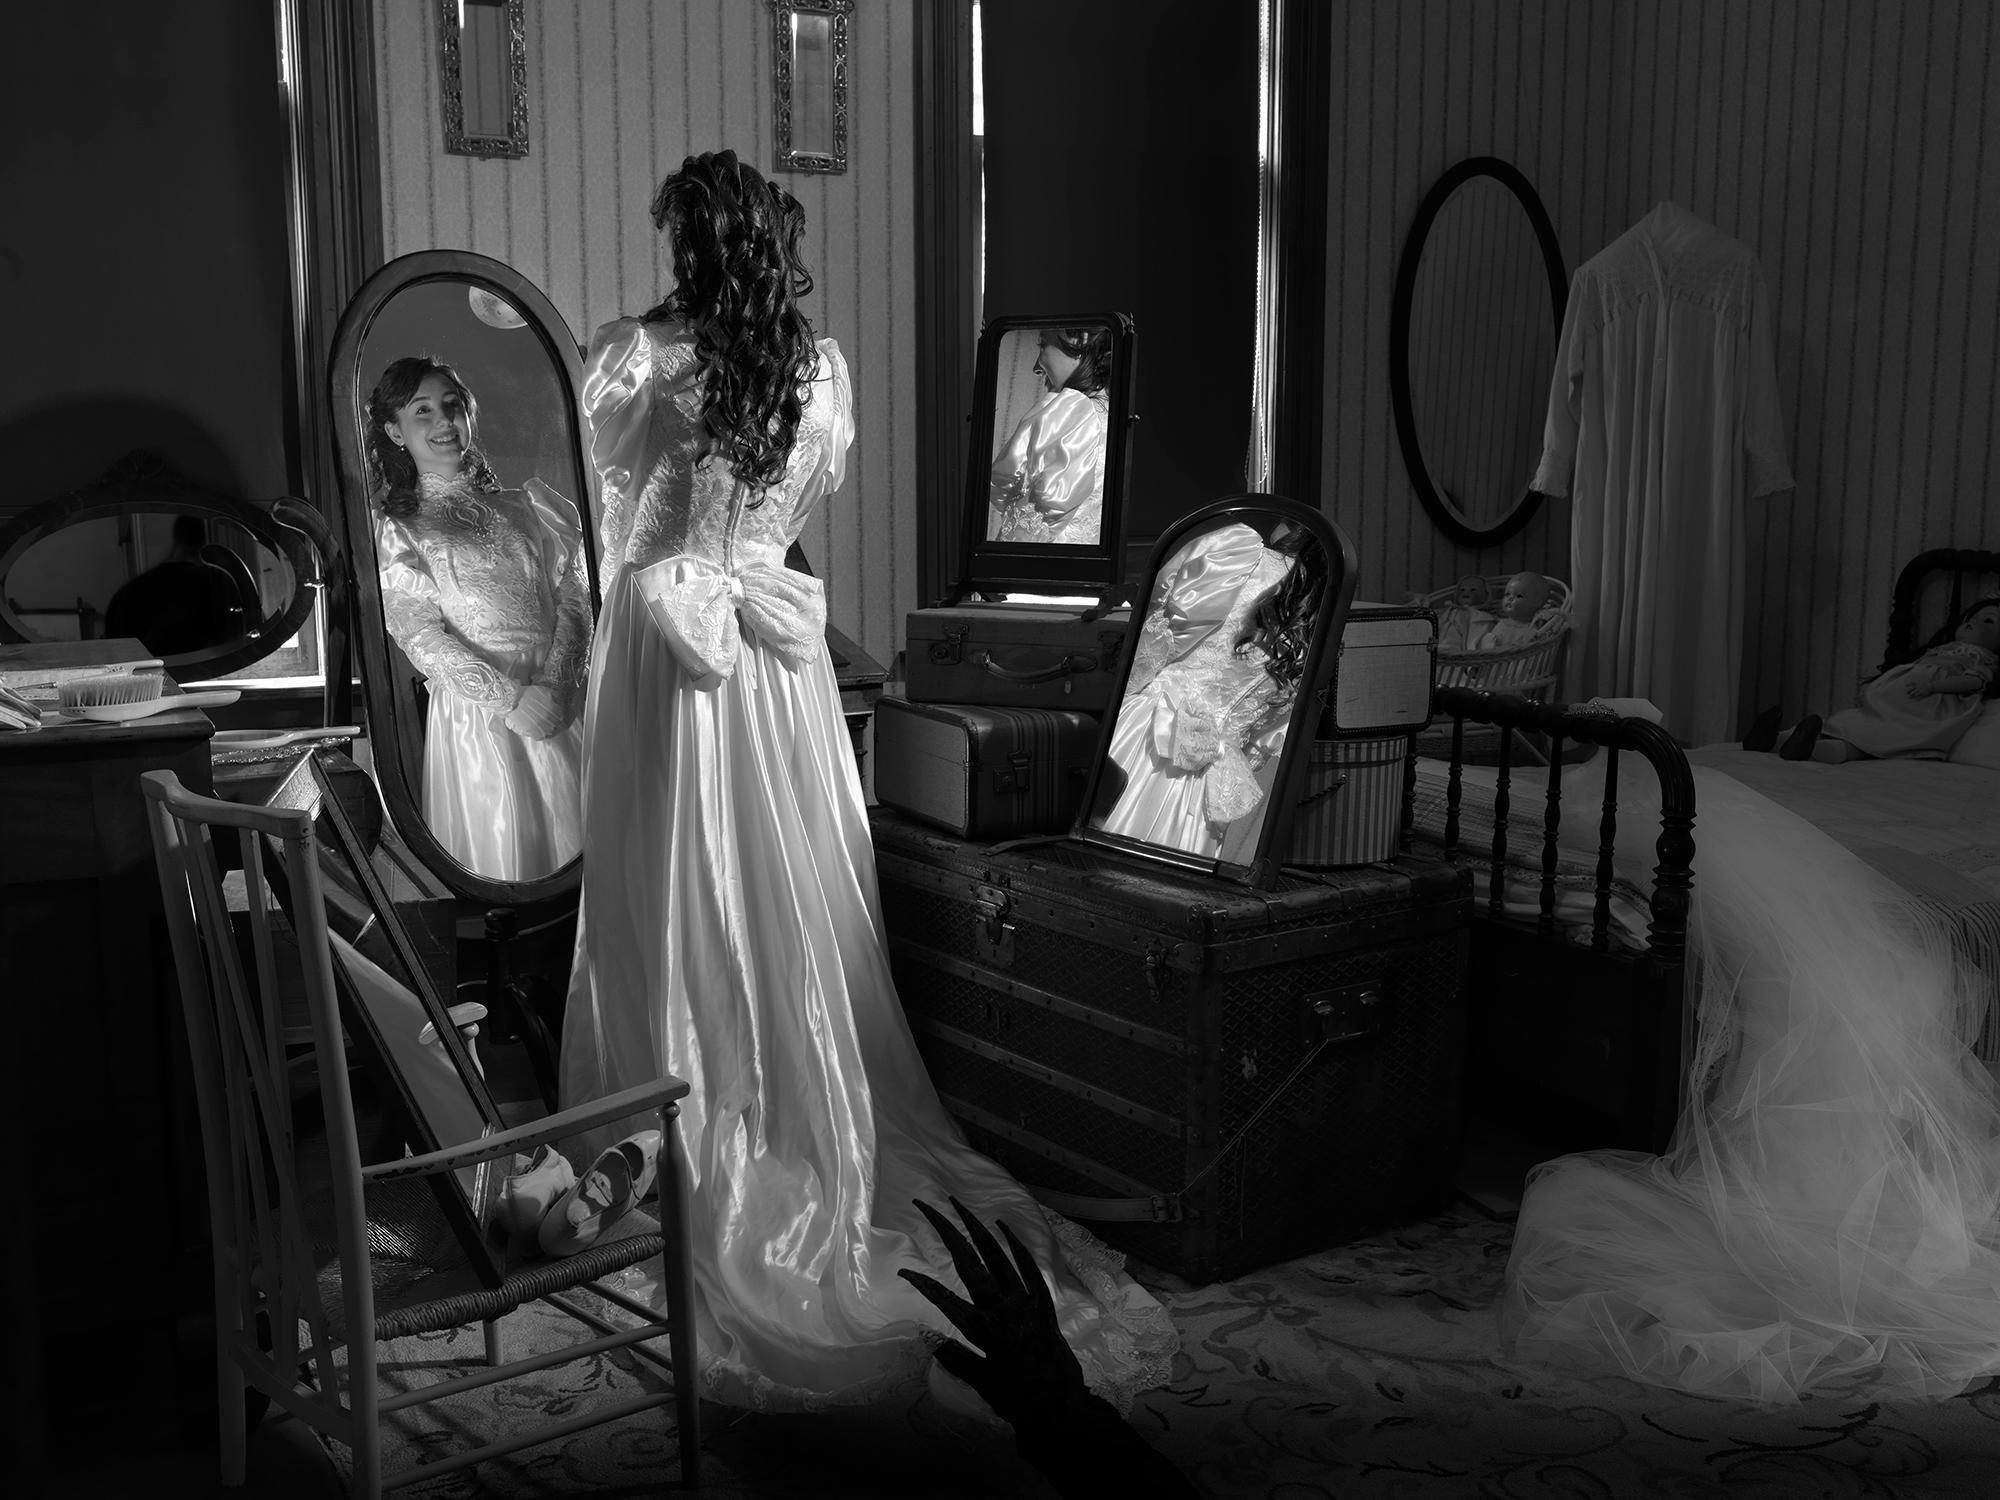 Dina Goldstein Figurative Photograph - Ashmodai Mirrors